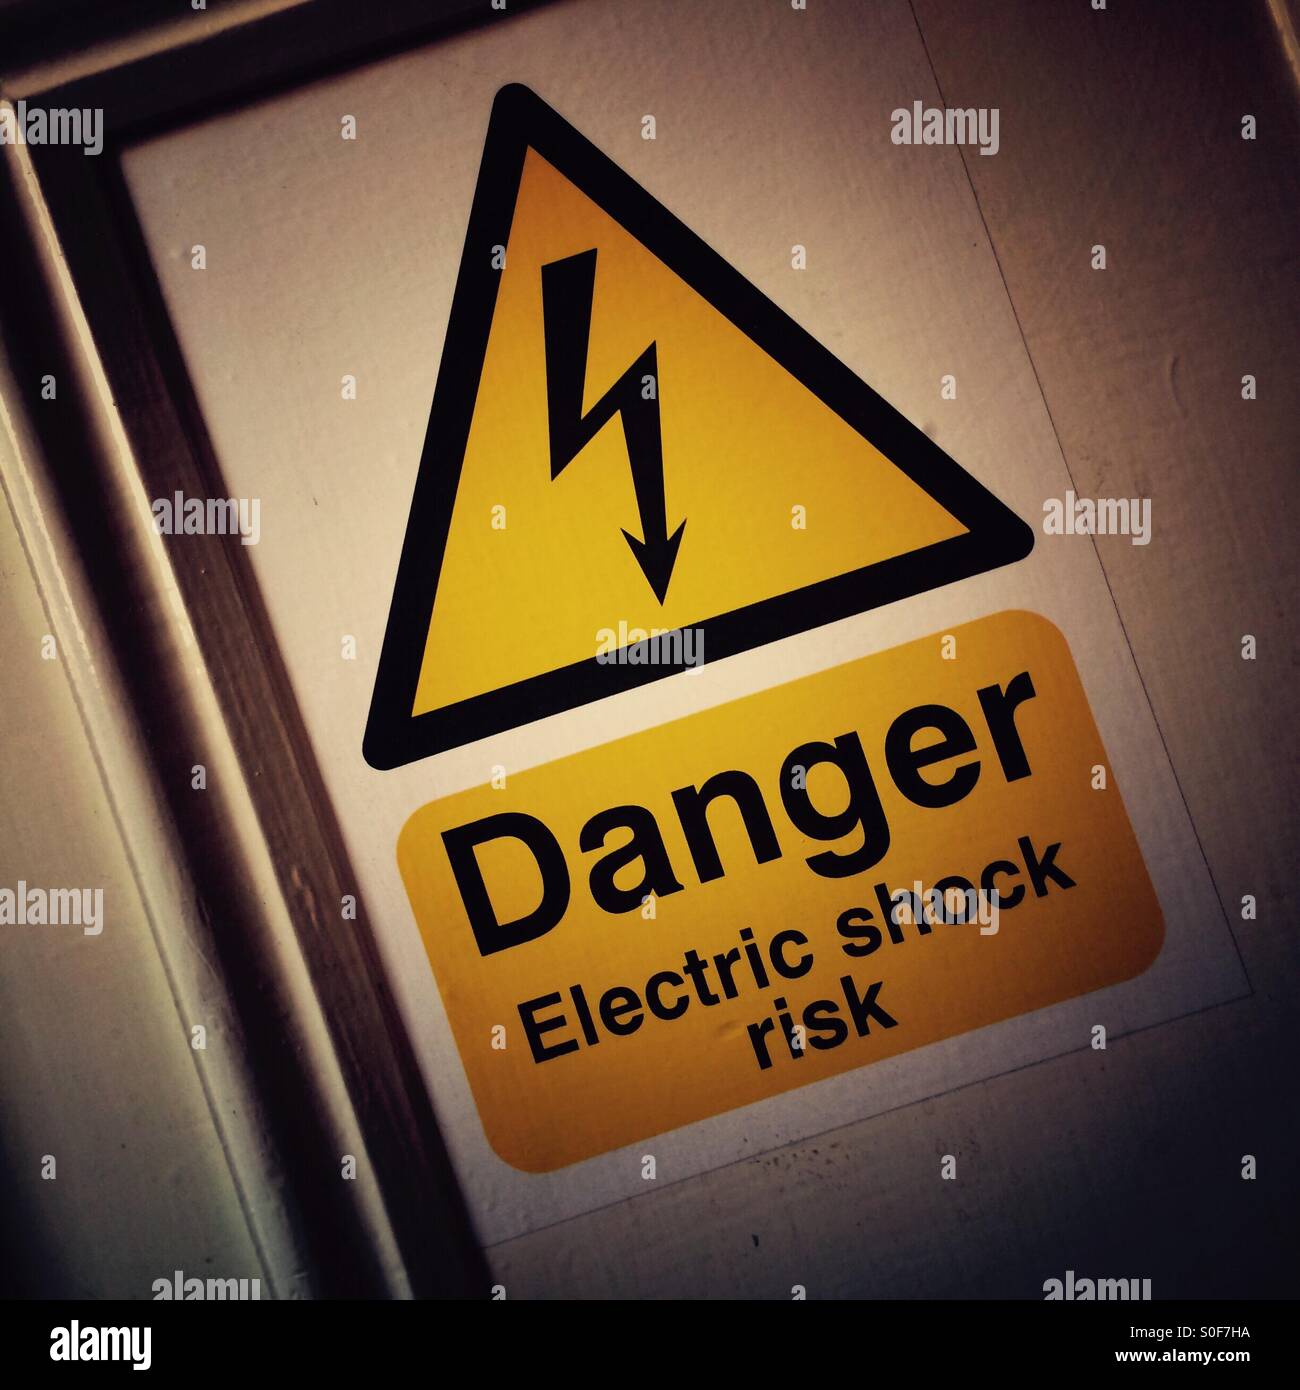 Danger, electric shock risk warning sign Stock Photo